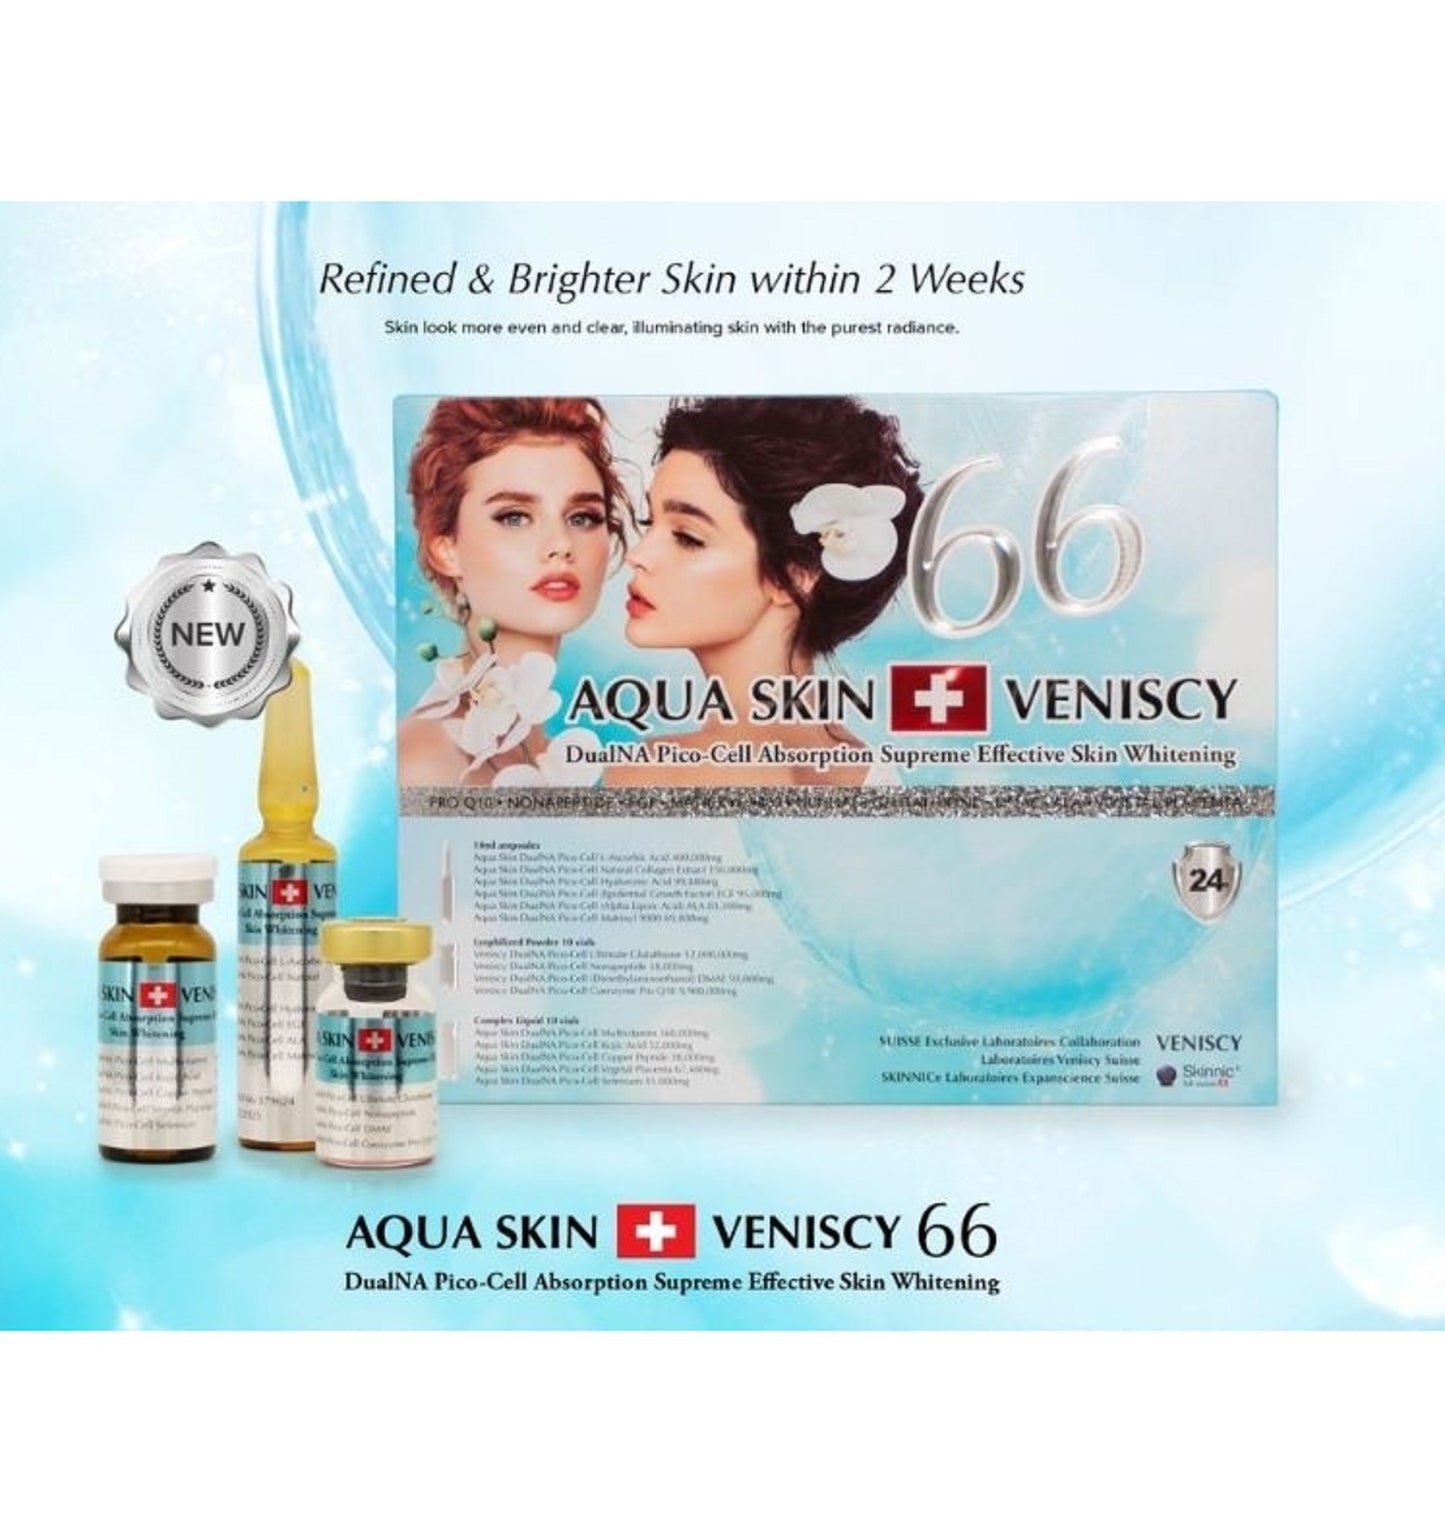 Aqua Skin Veniscy 66